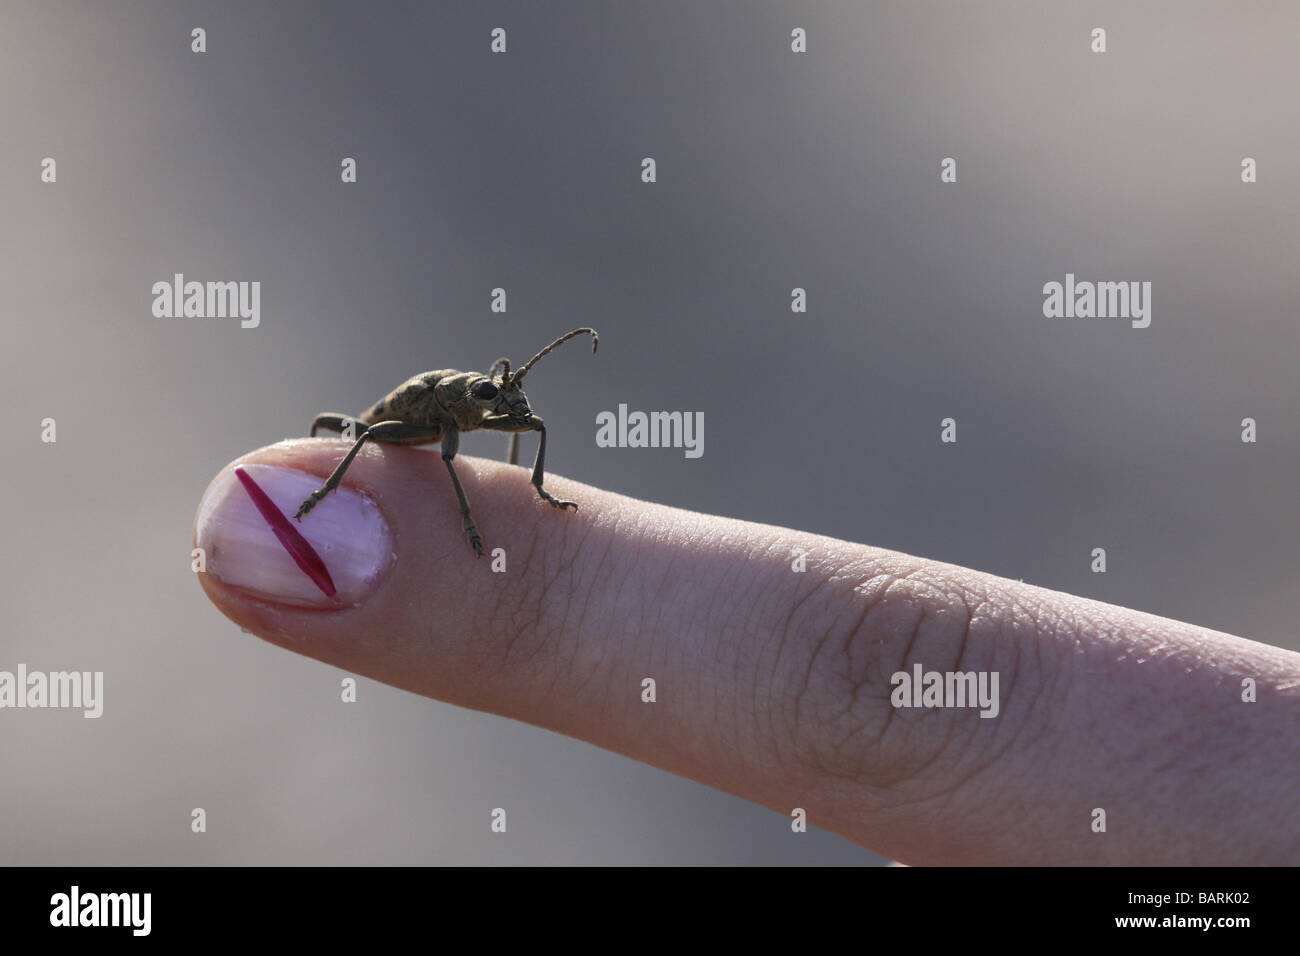 Long-horned beetle on the finger Stock Photo